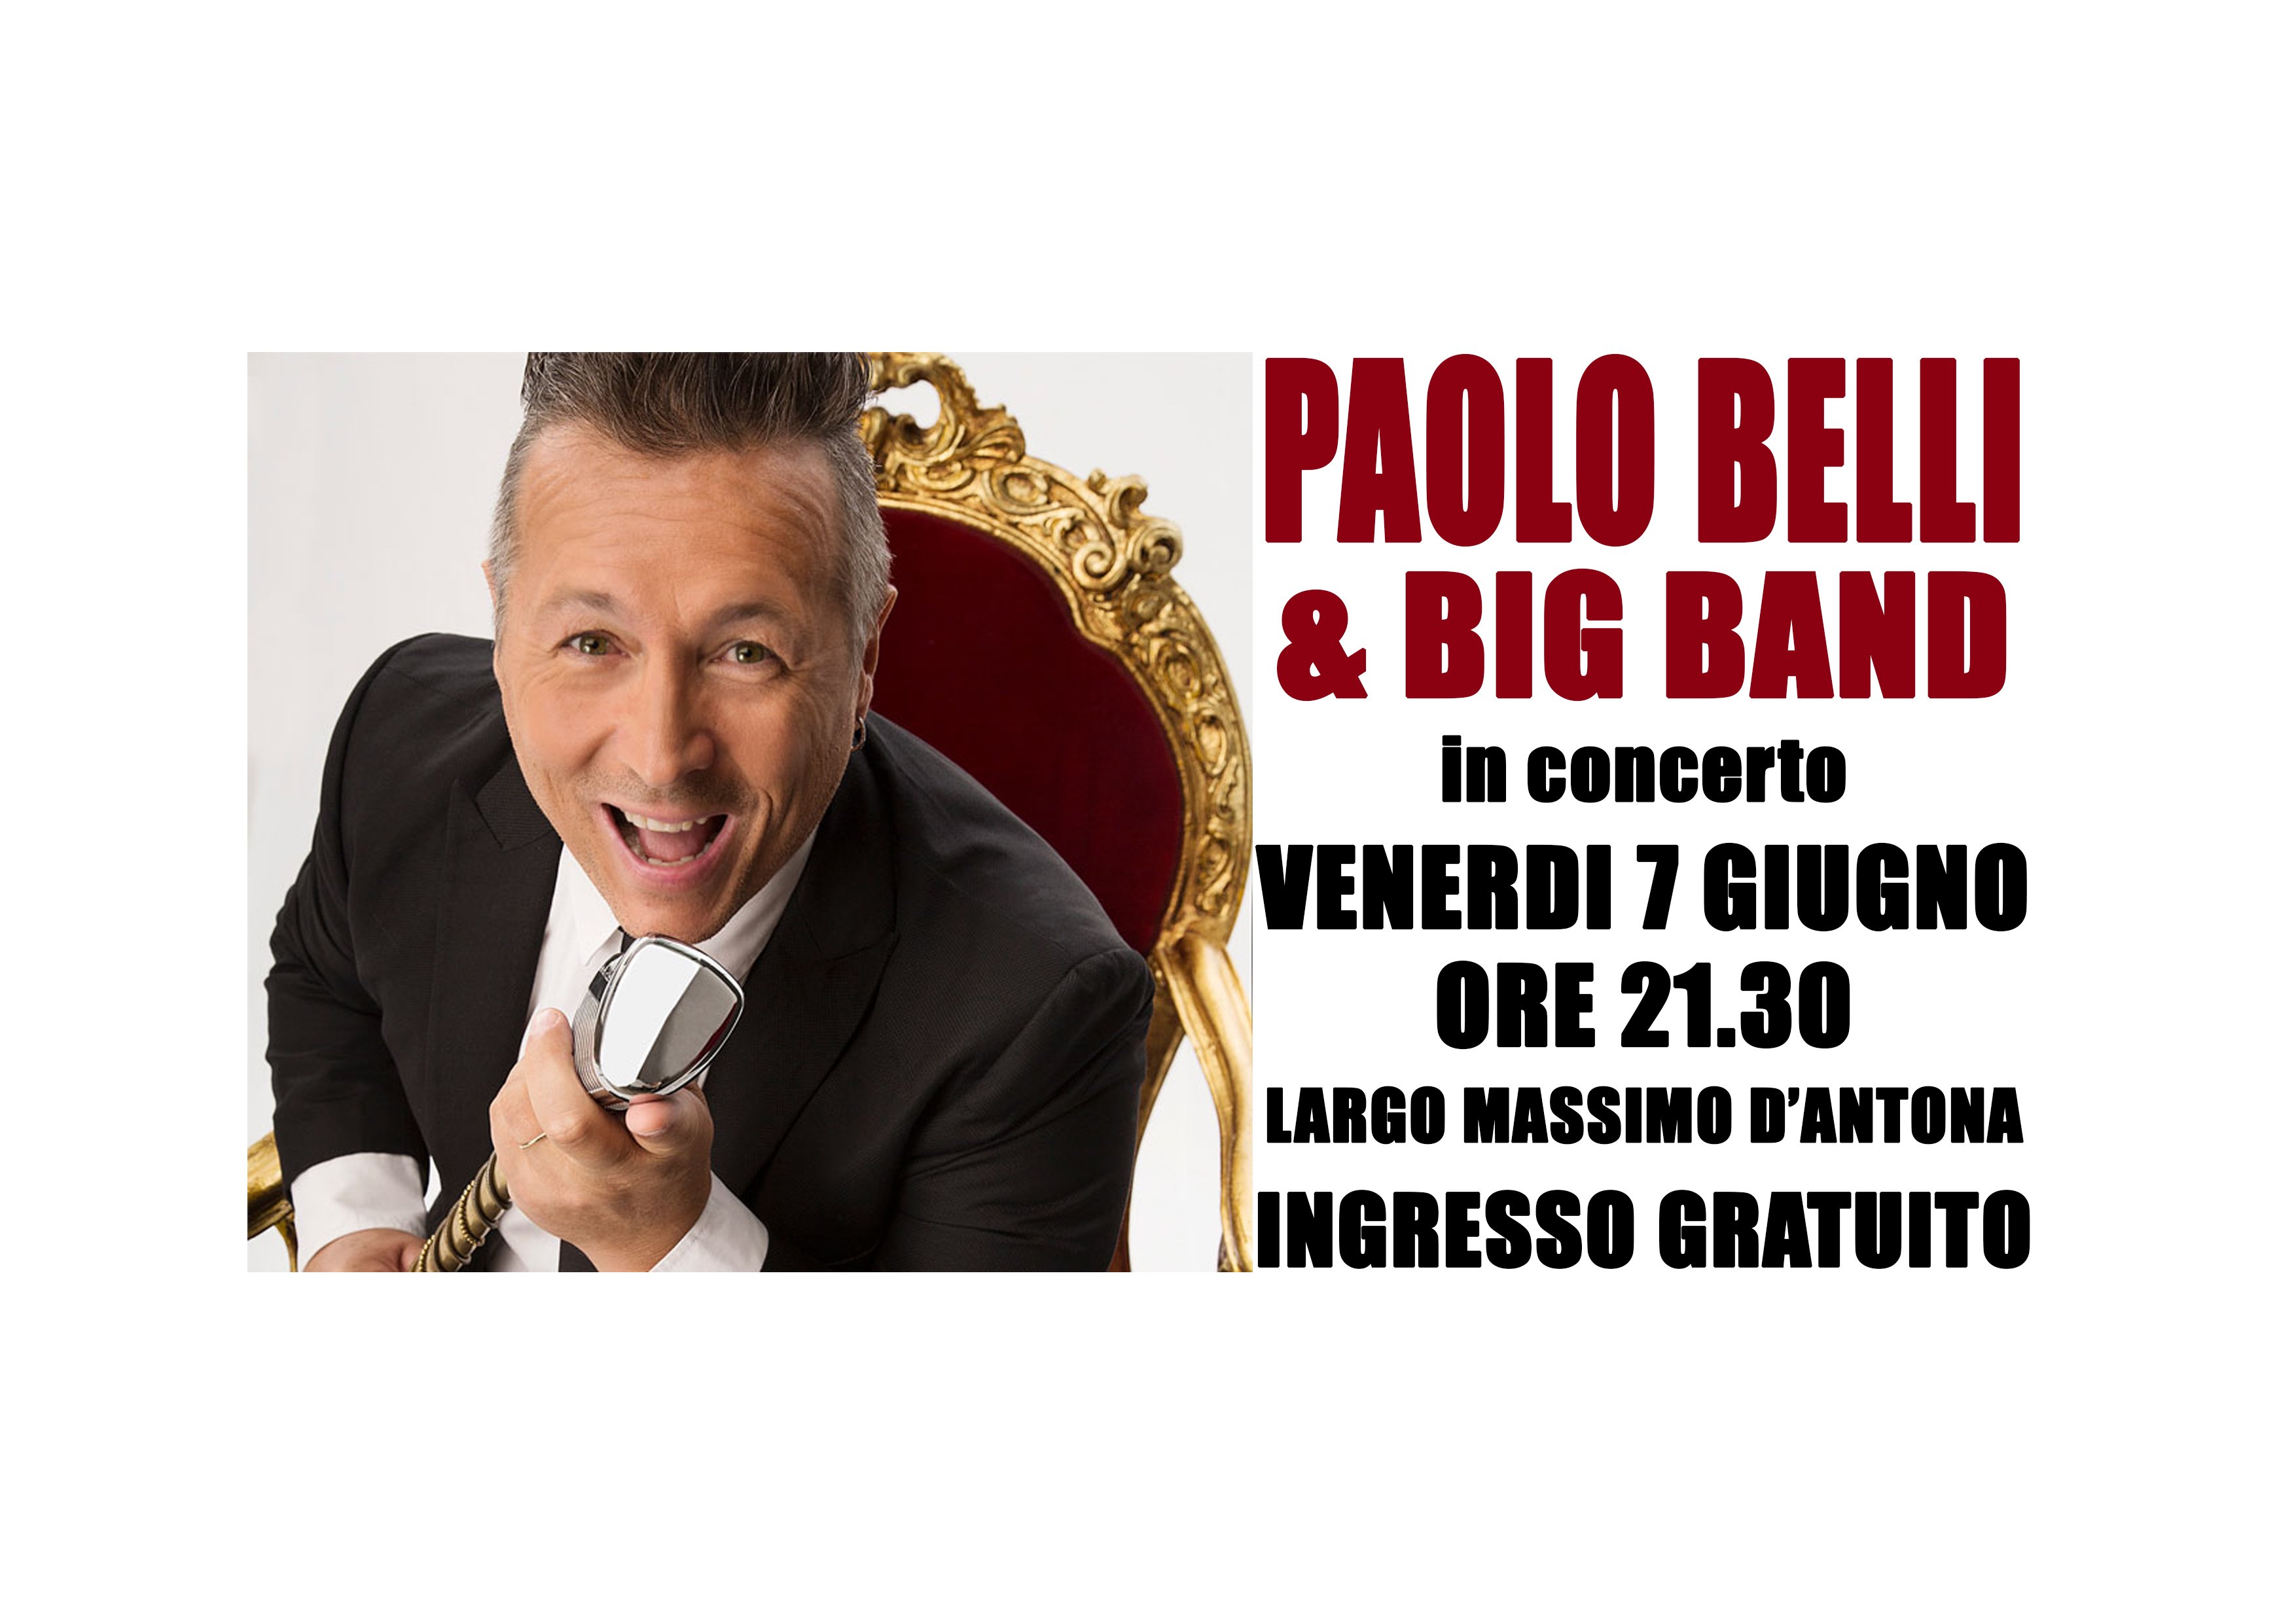 paolo belli big band tour 2023